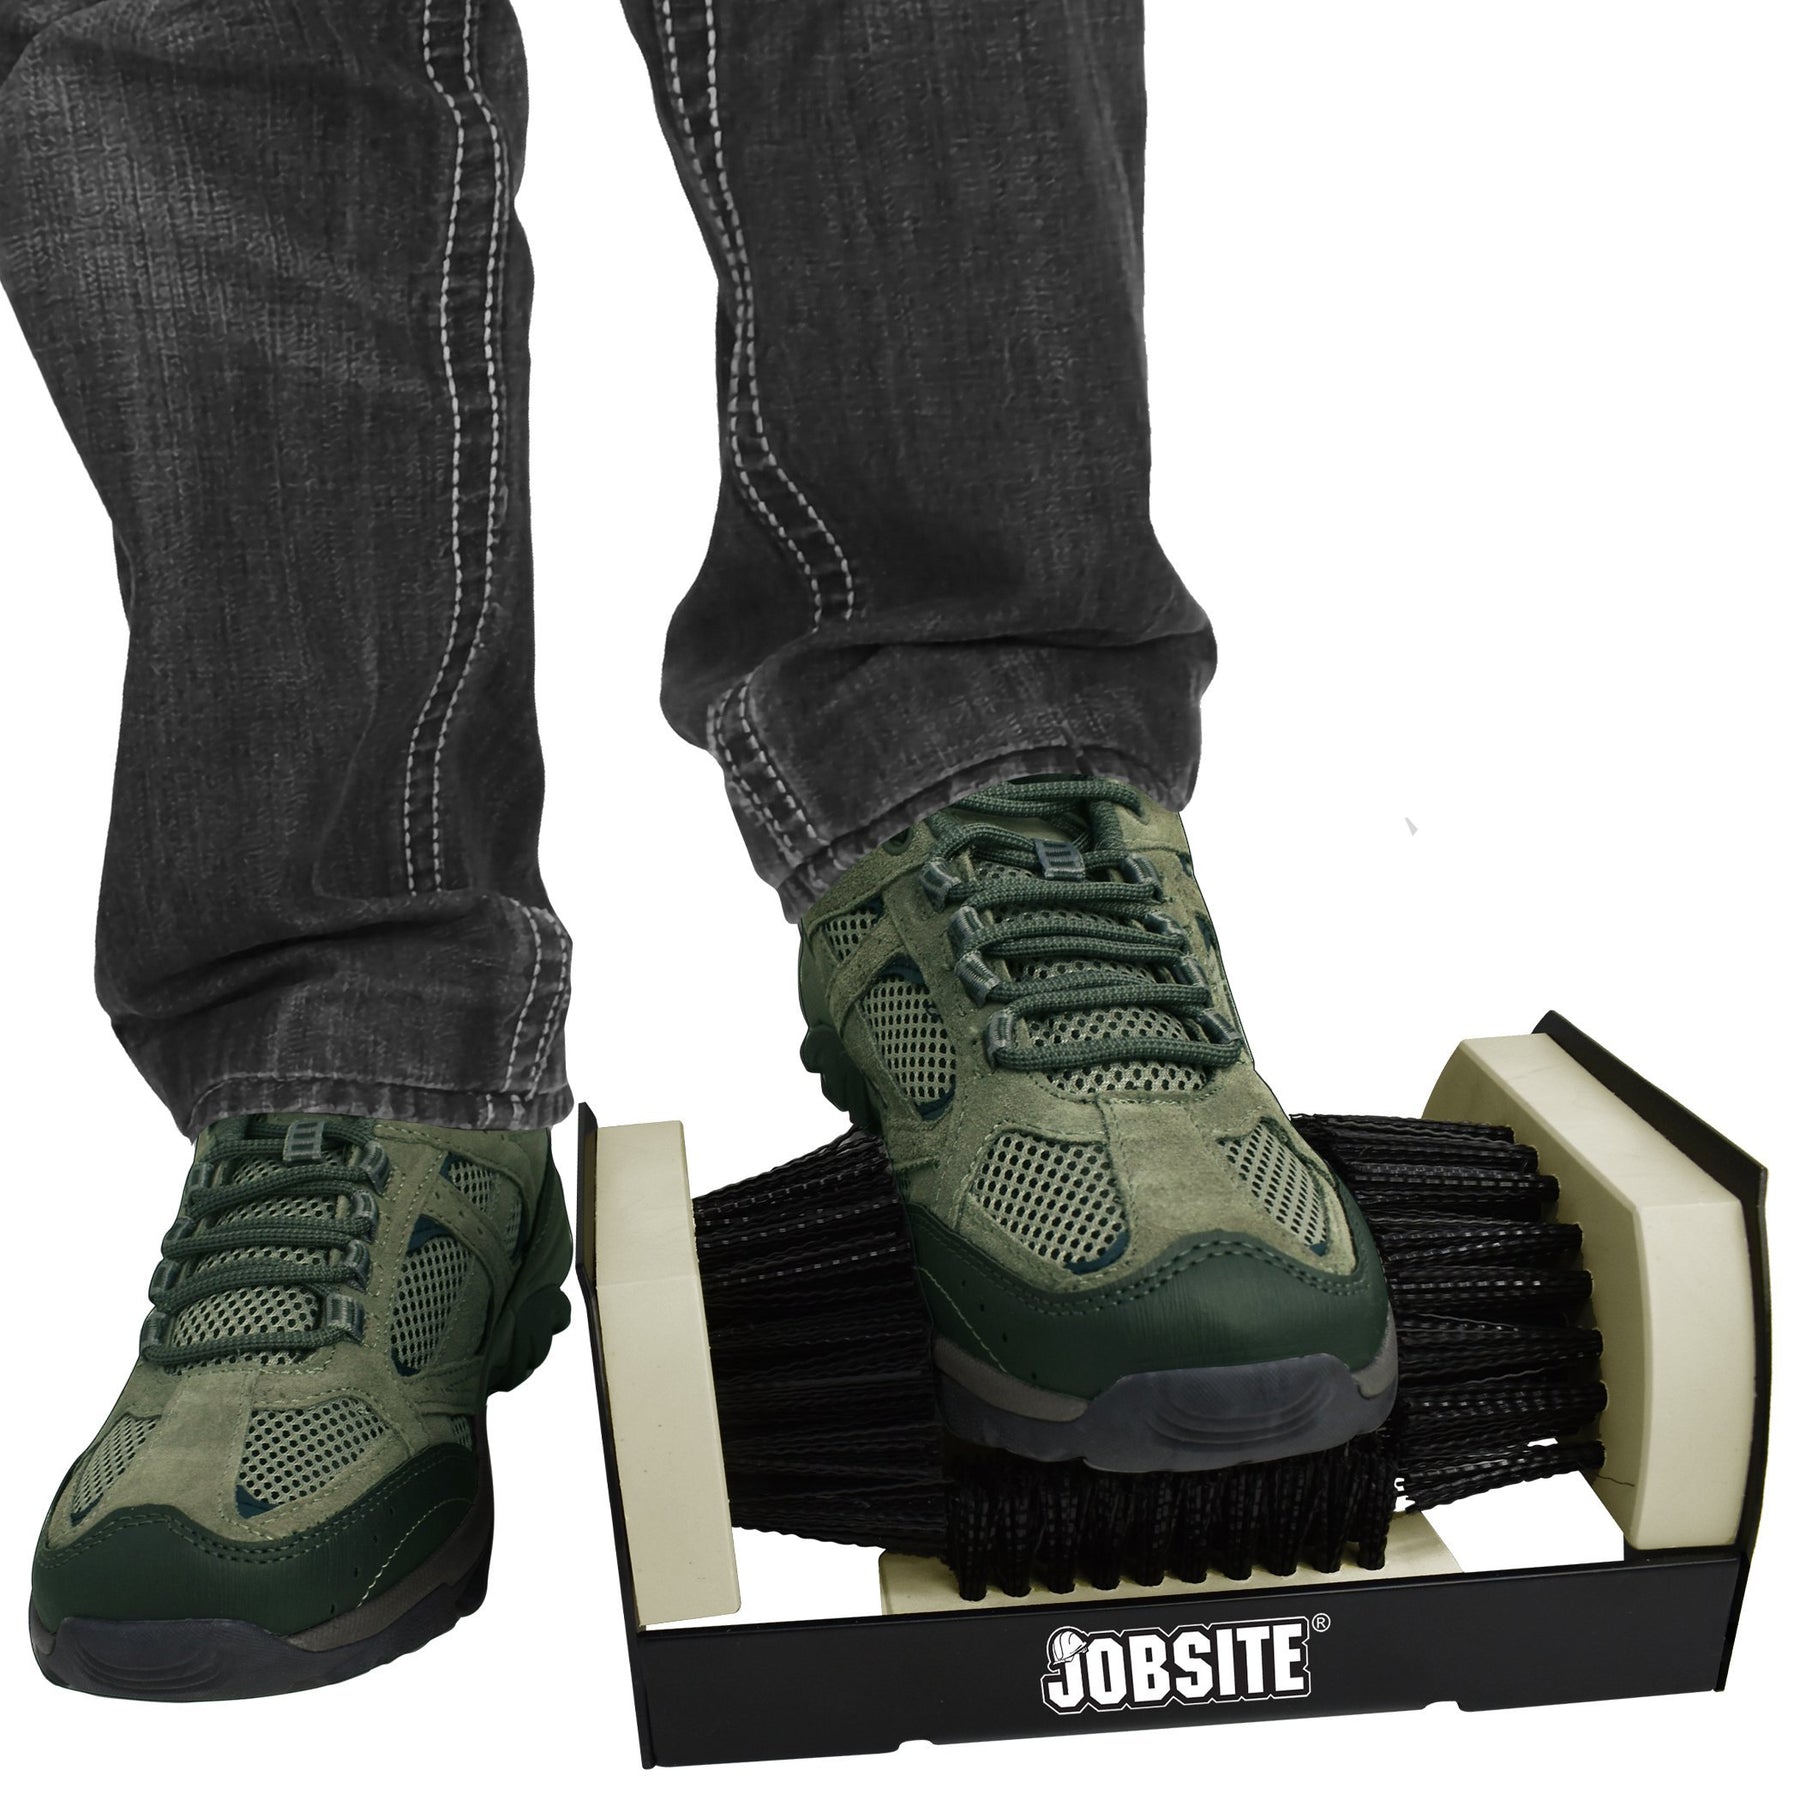 JobSite Premium Boot Puller - Rubber Grip Inlay - Shoe & Boot Remover (1  Unit) 